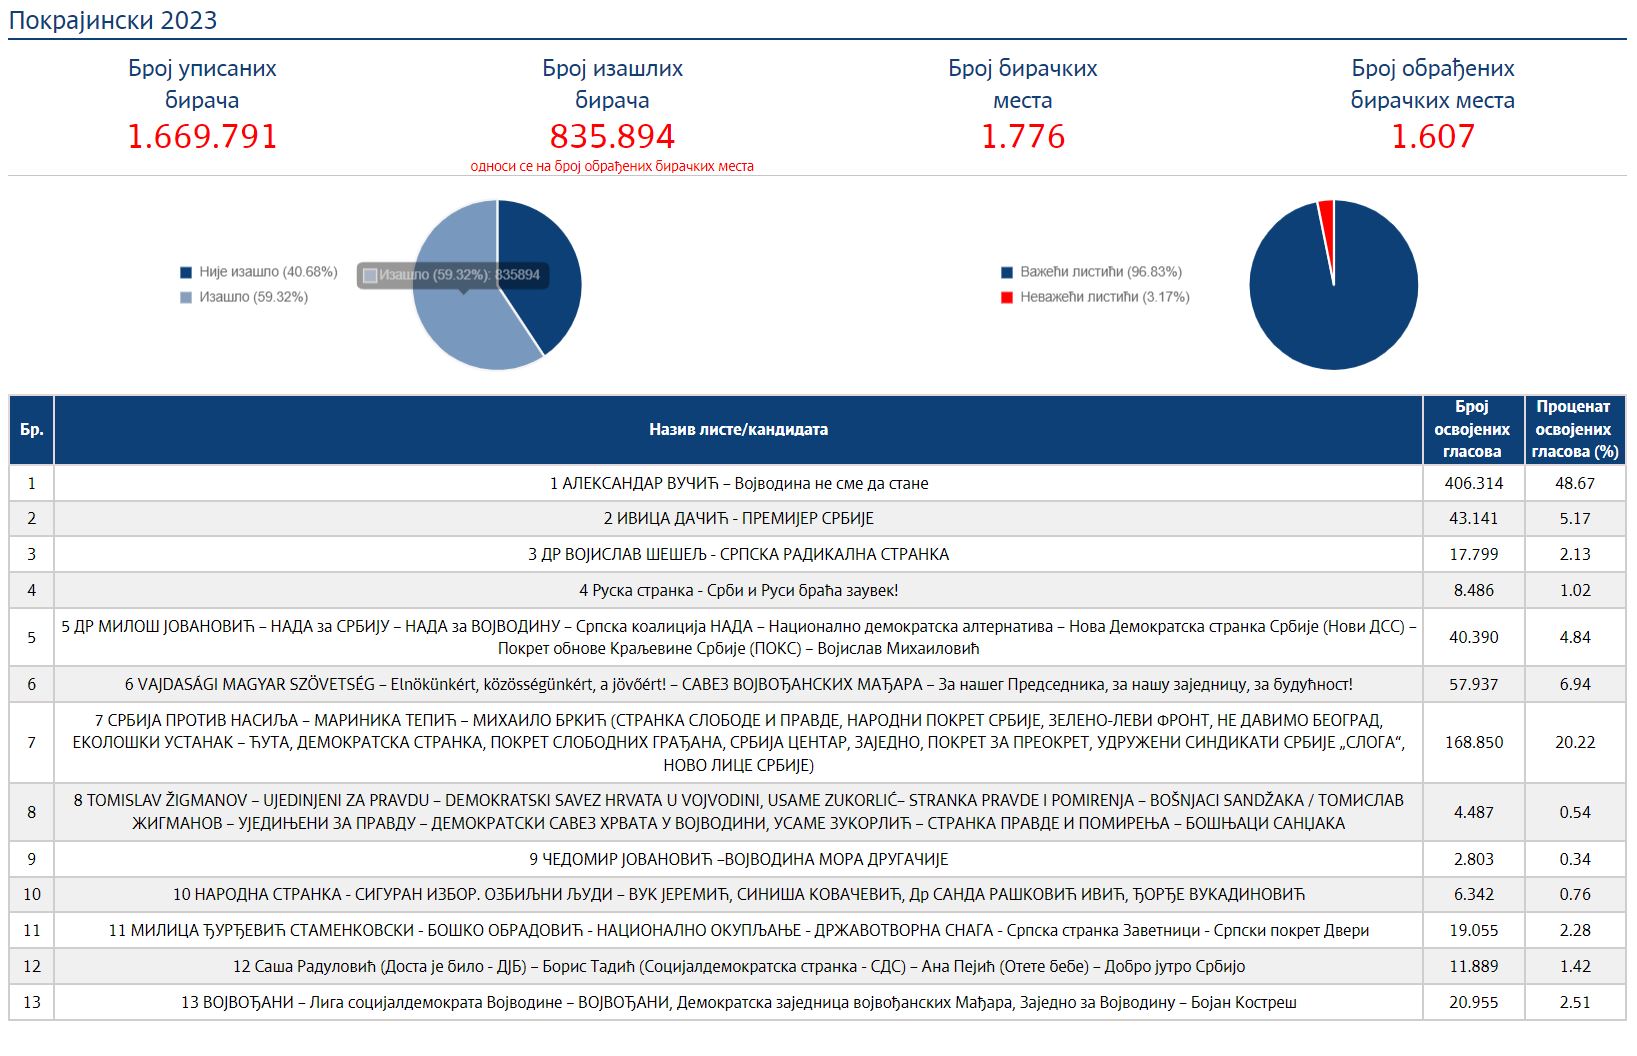 RIK objavio najnovije rezultate za parlamentarne i pokrajinske izbore 3